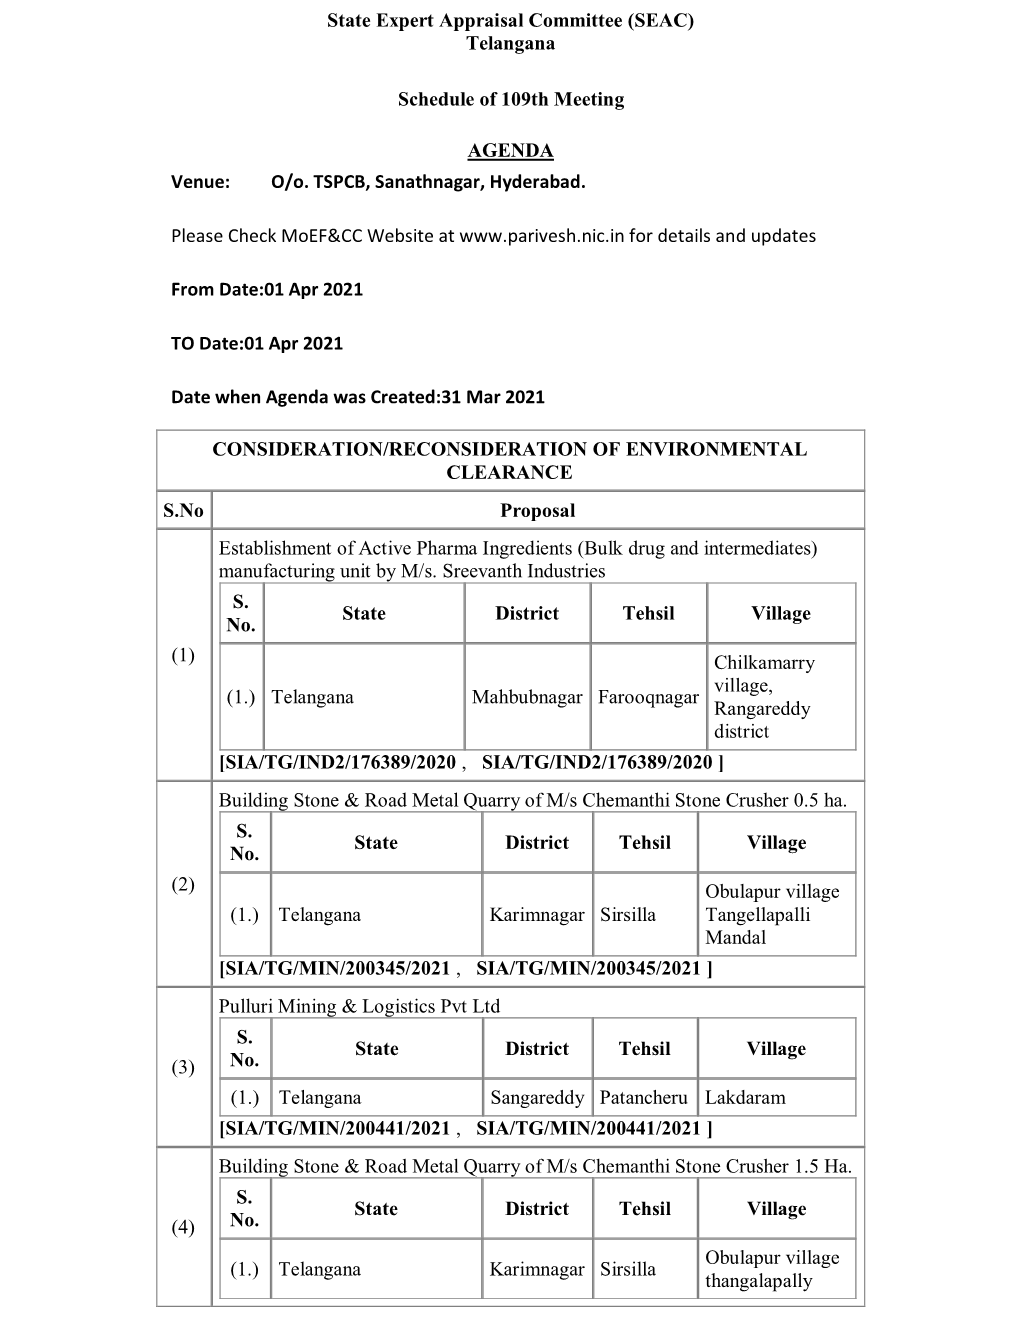 State Expert Appraisal Committee (SEAC) Telangana